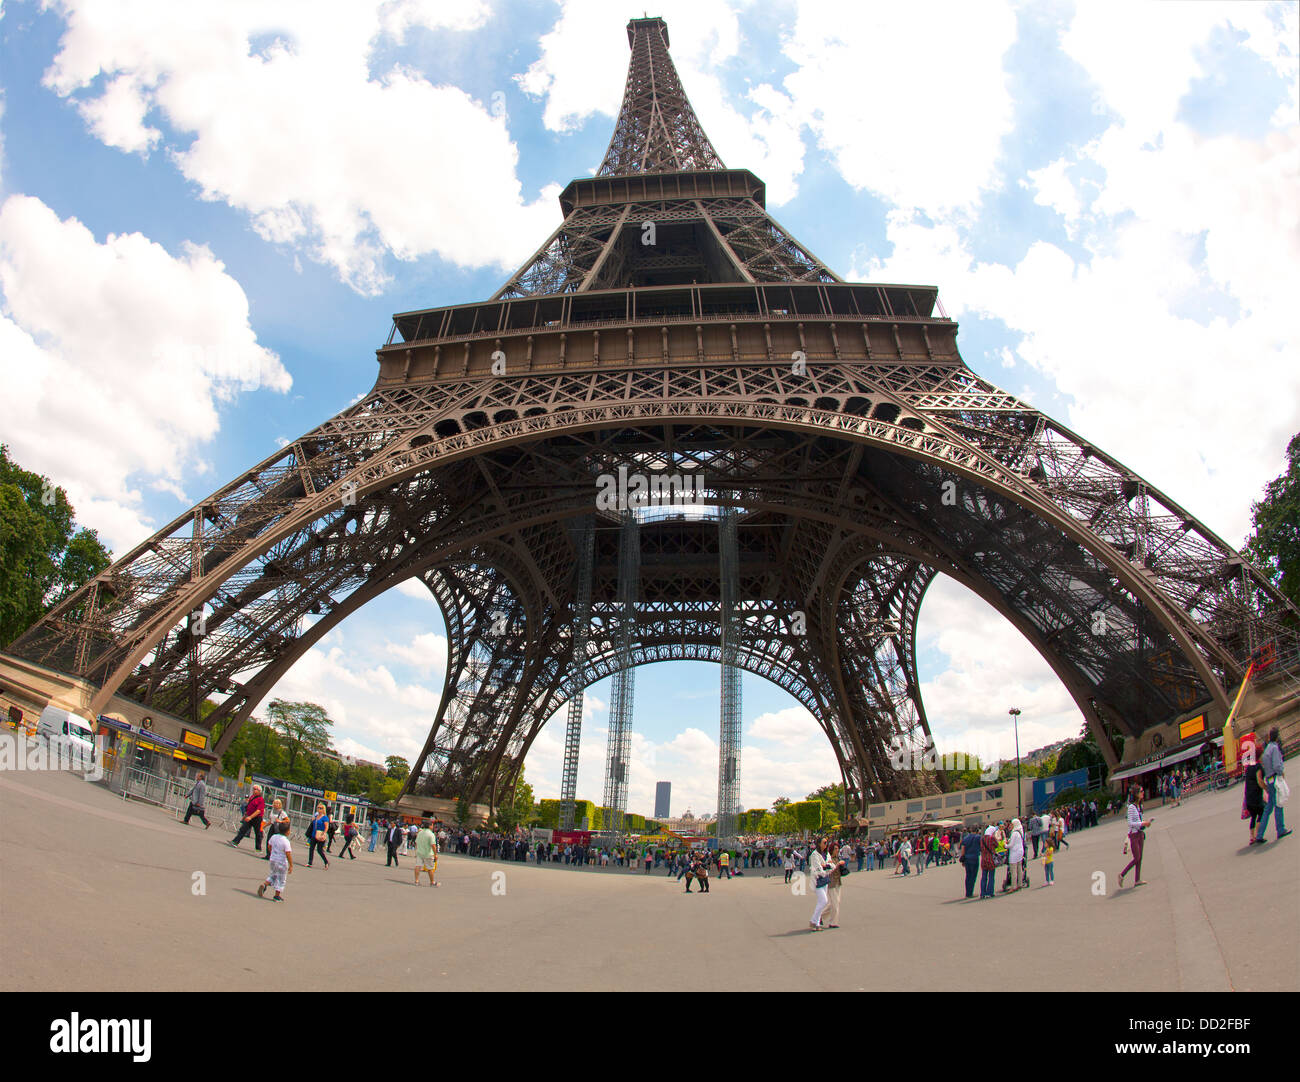 Under the Eiffel Tower (la Tour Eiffel) located on the Champ de Mars in Paris France Stock Photo